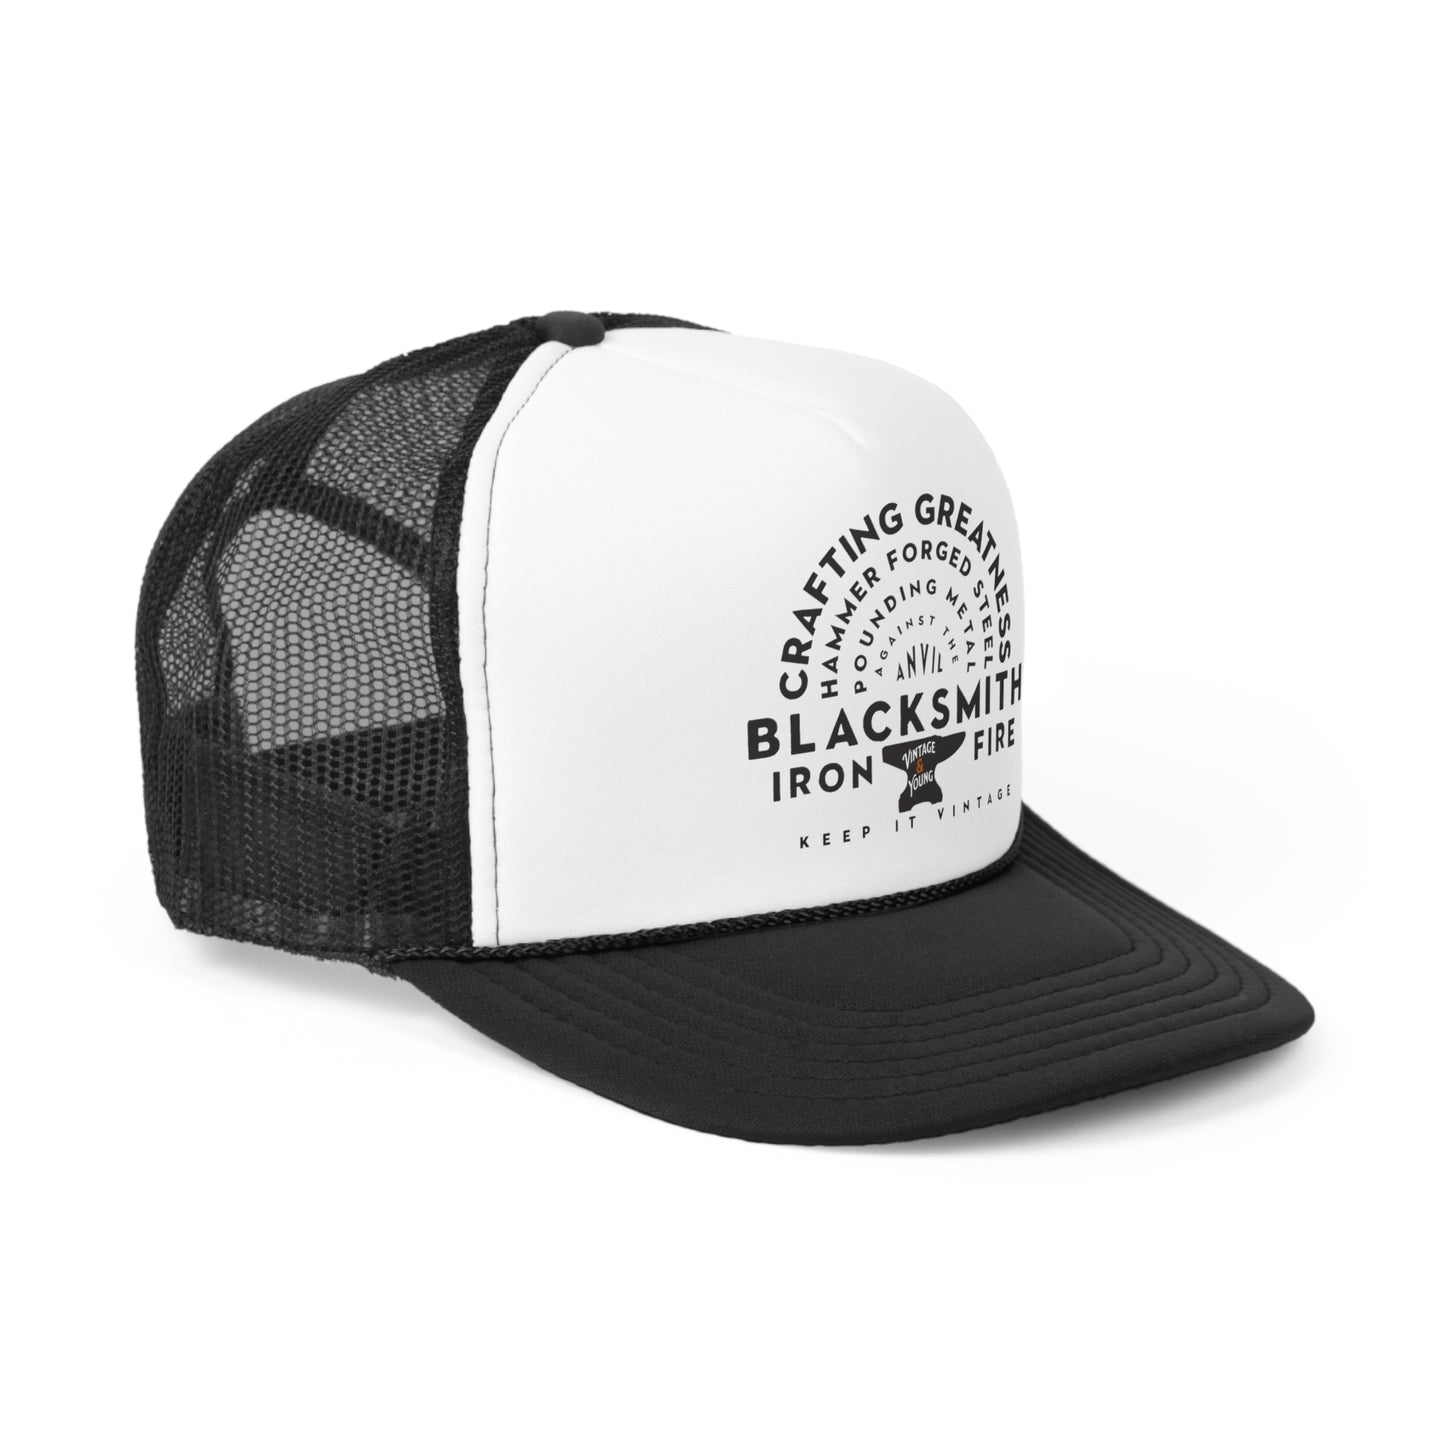 Crafting Greatness: Blacksmith Hat